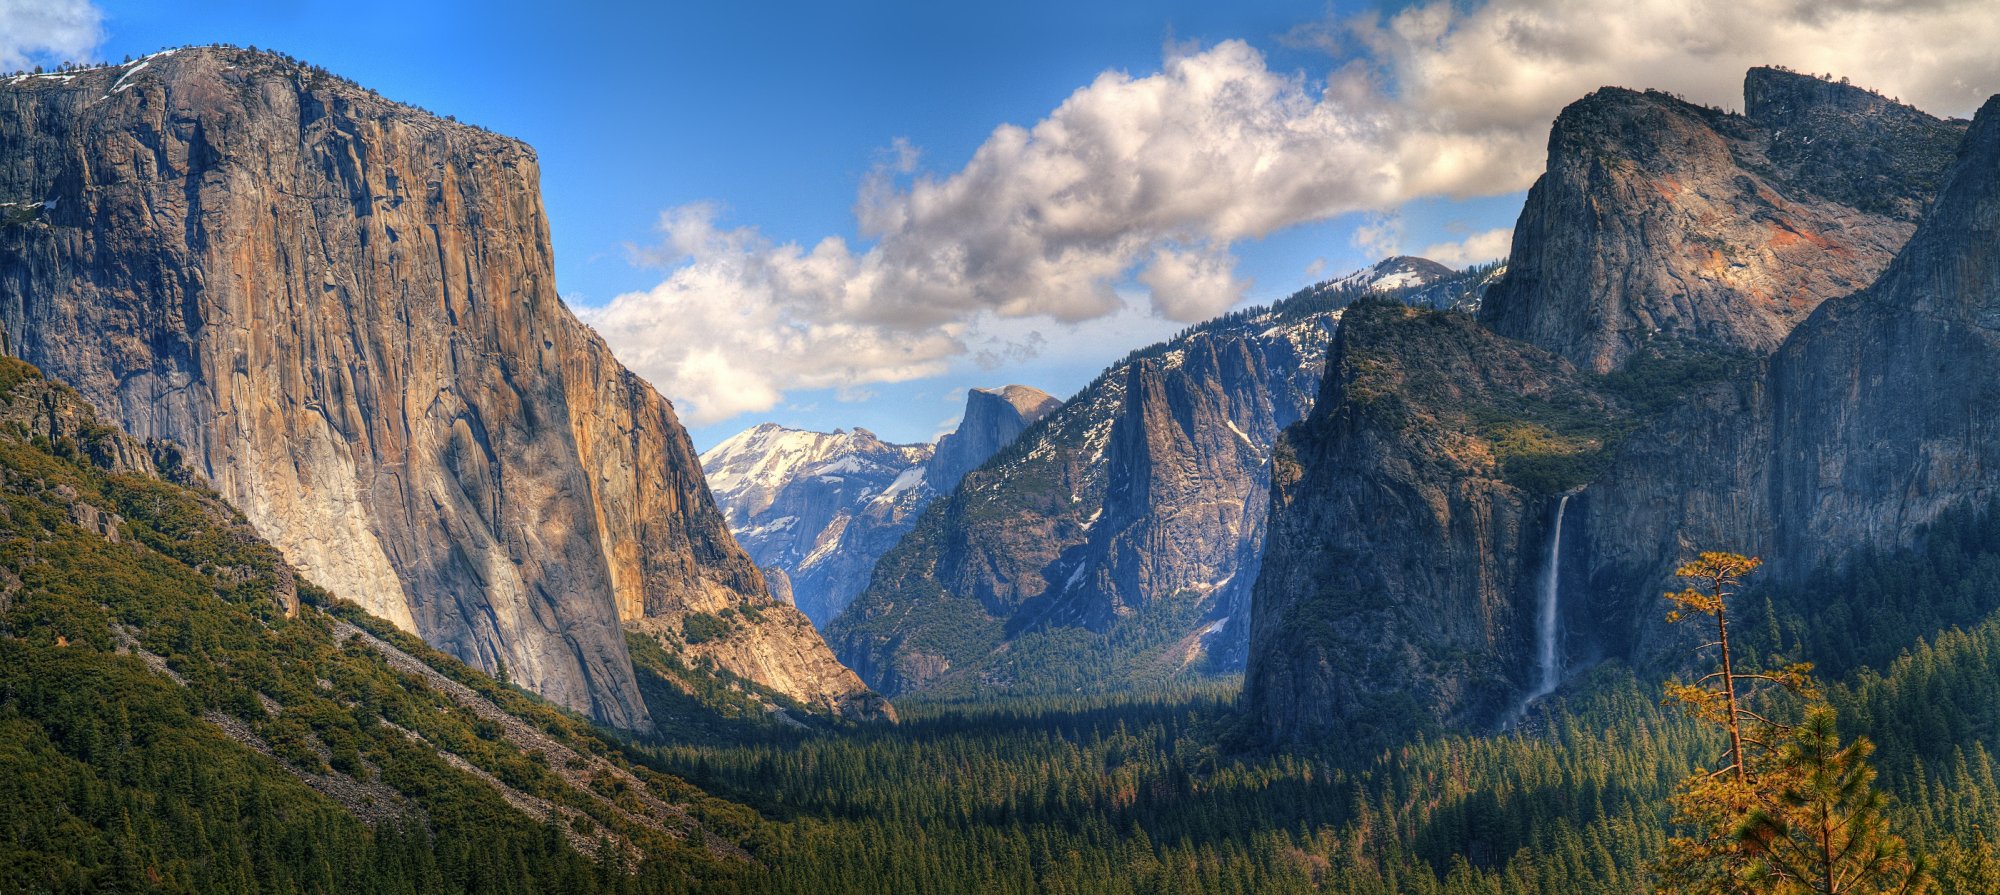 High Resolution Wallpaper | Yosemite National Park 2000x895 px